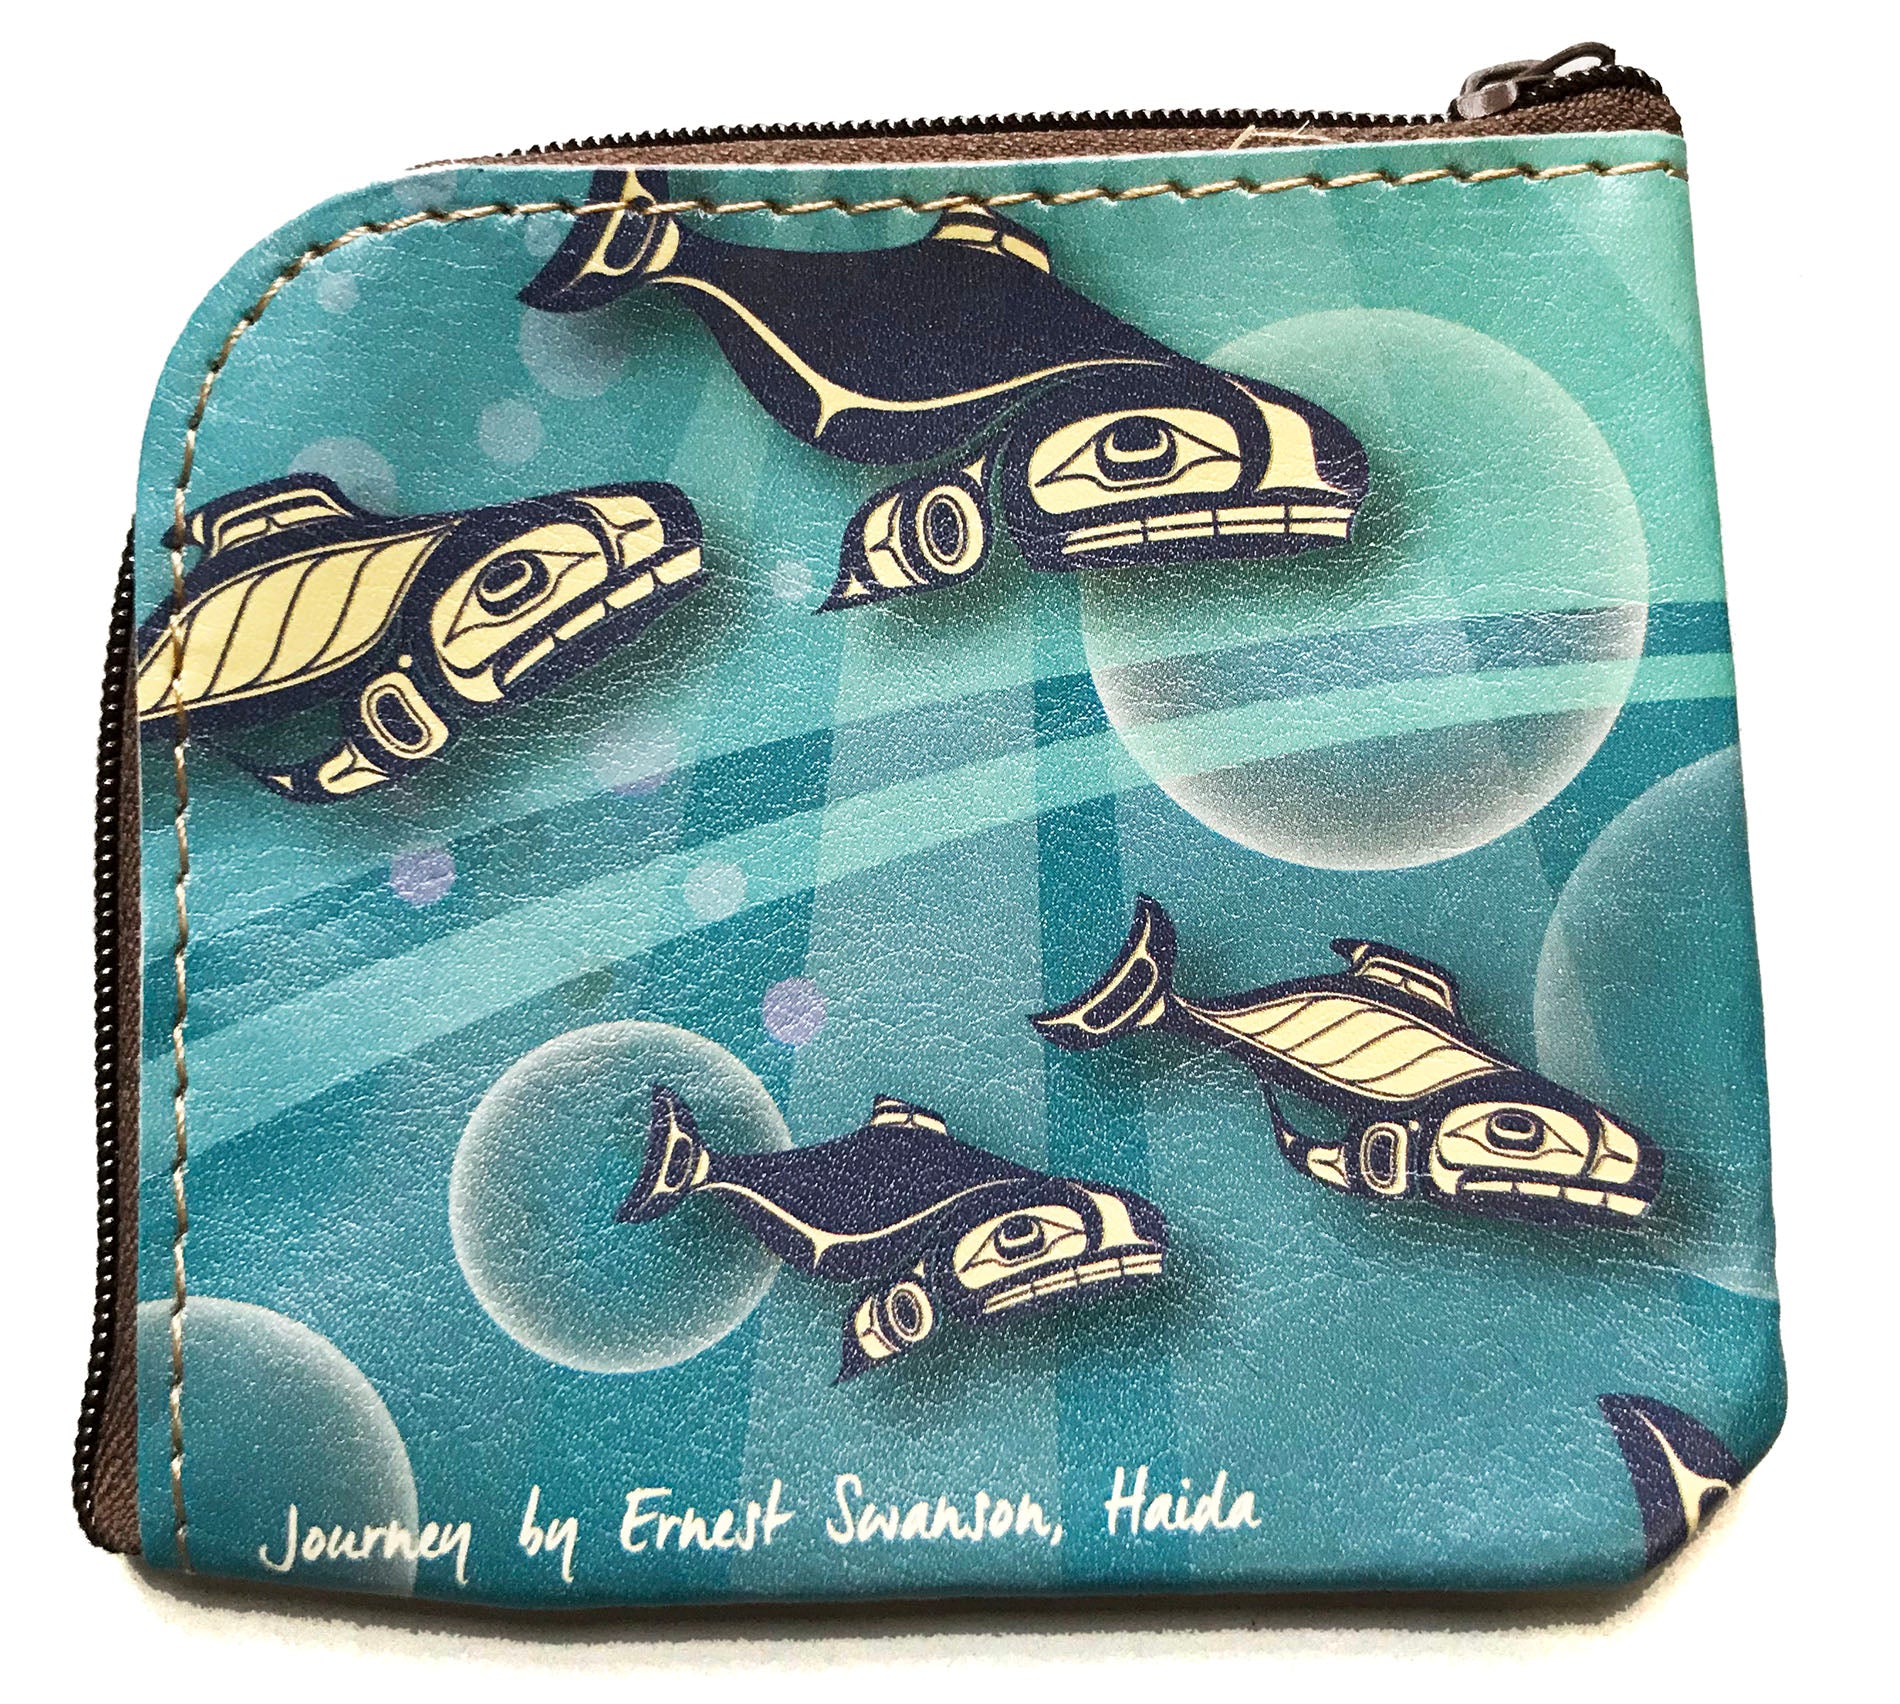 Sloane Ranger coin purse whale print – ASA College: Florida